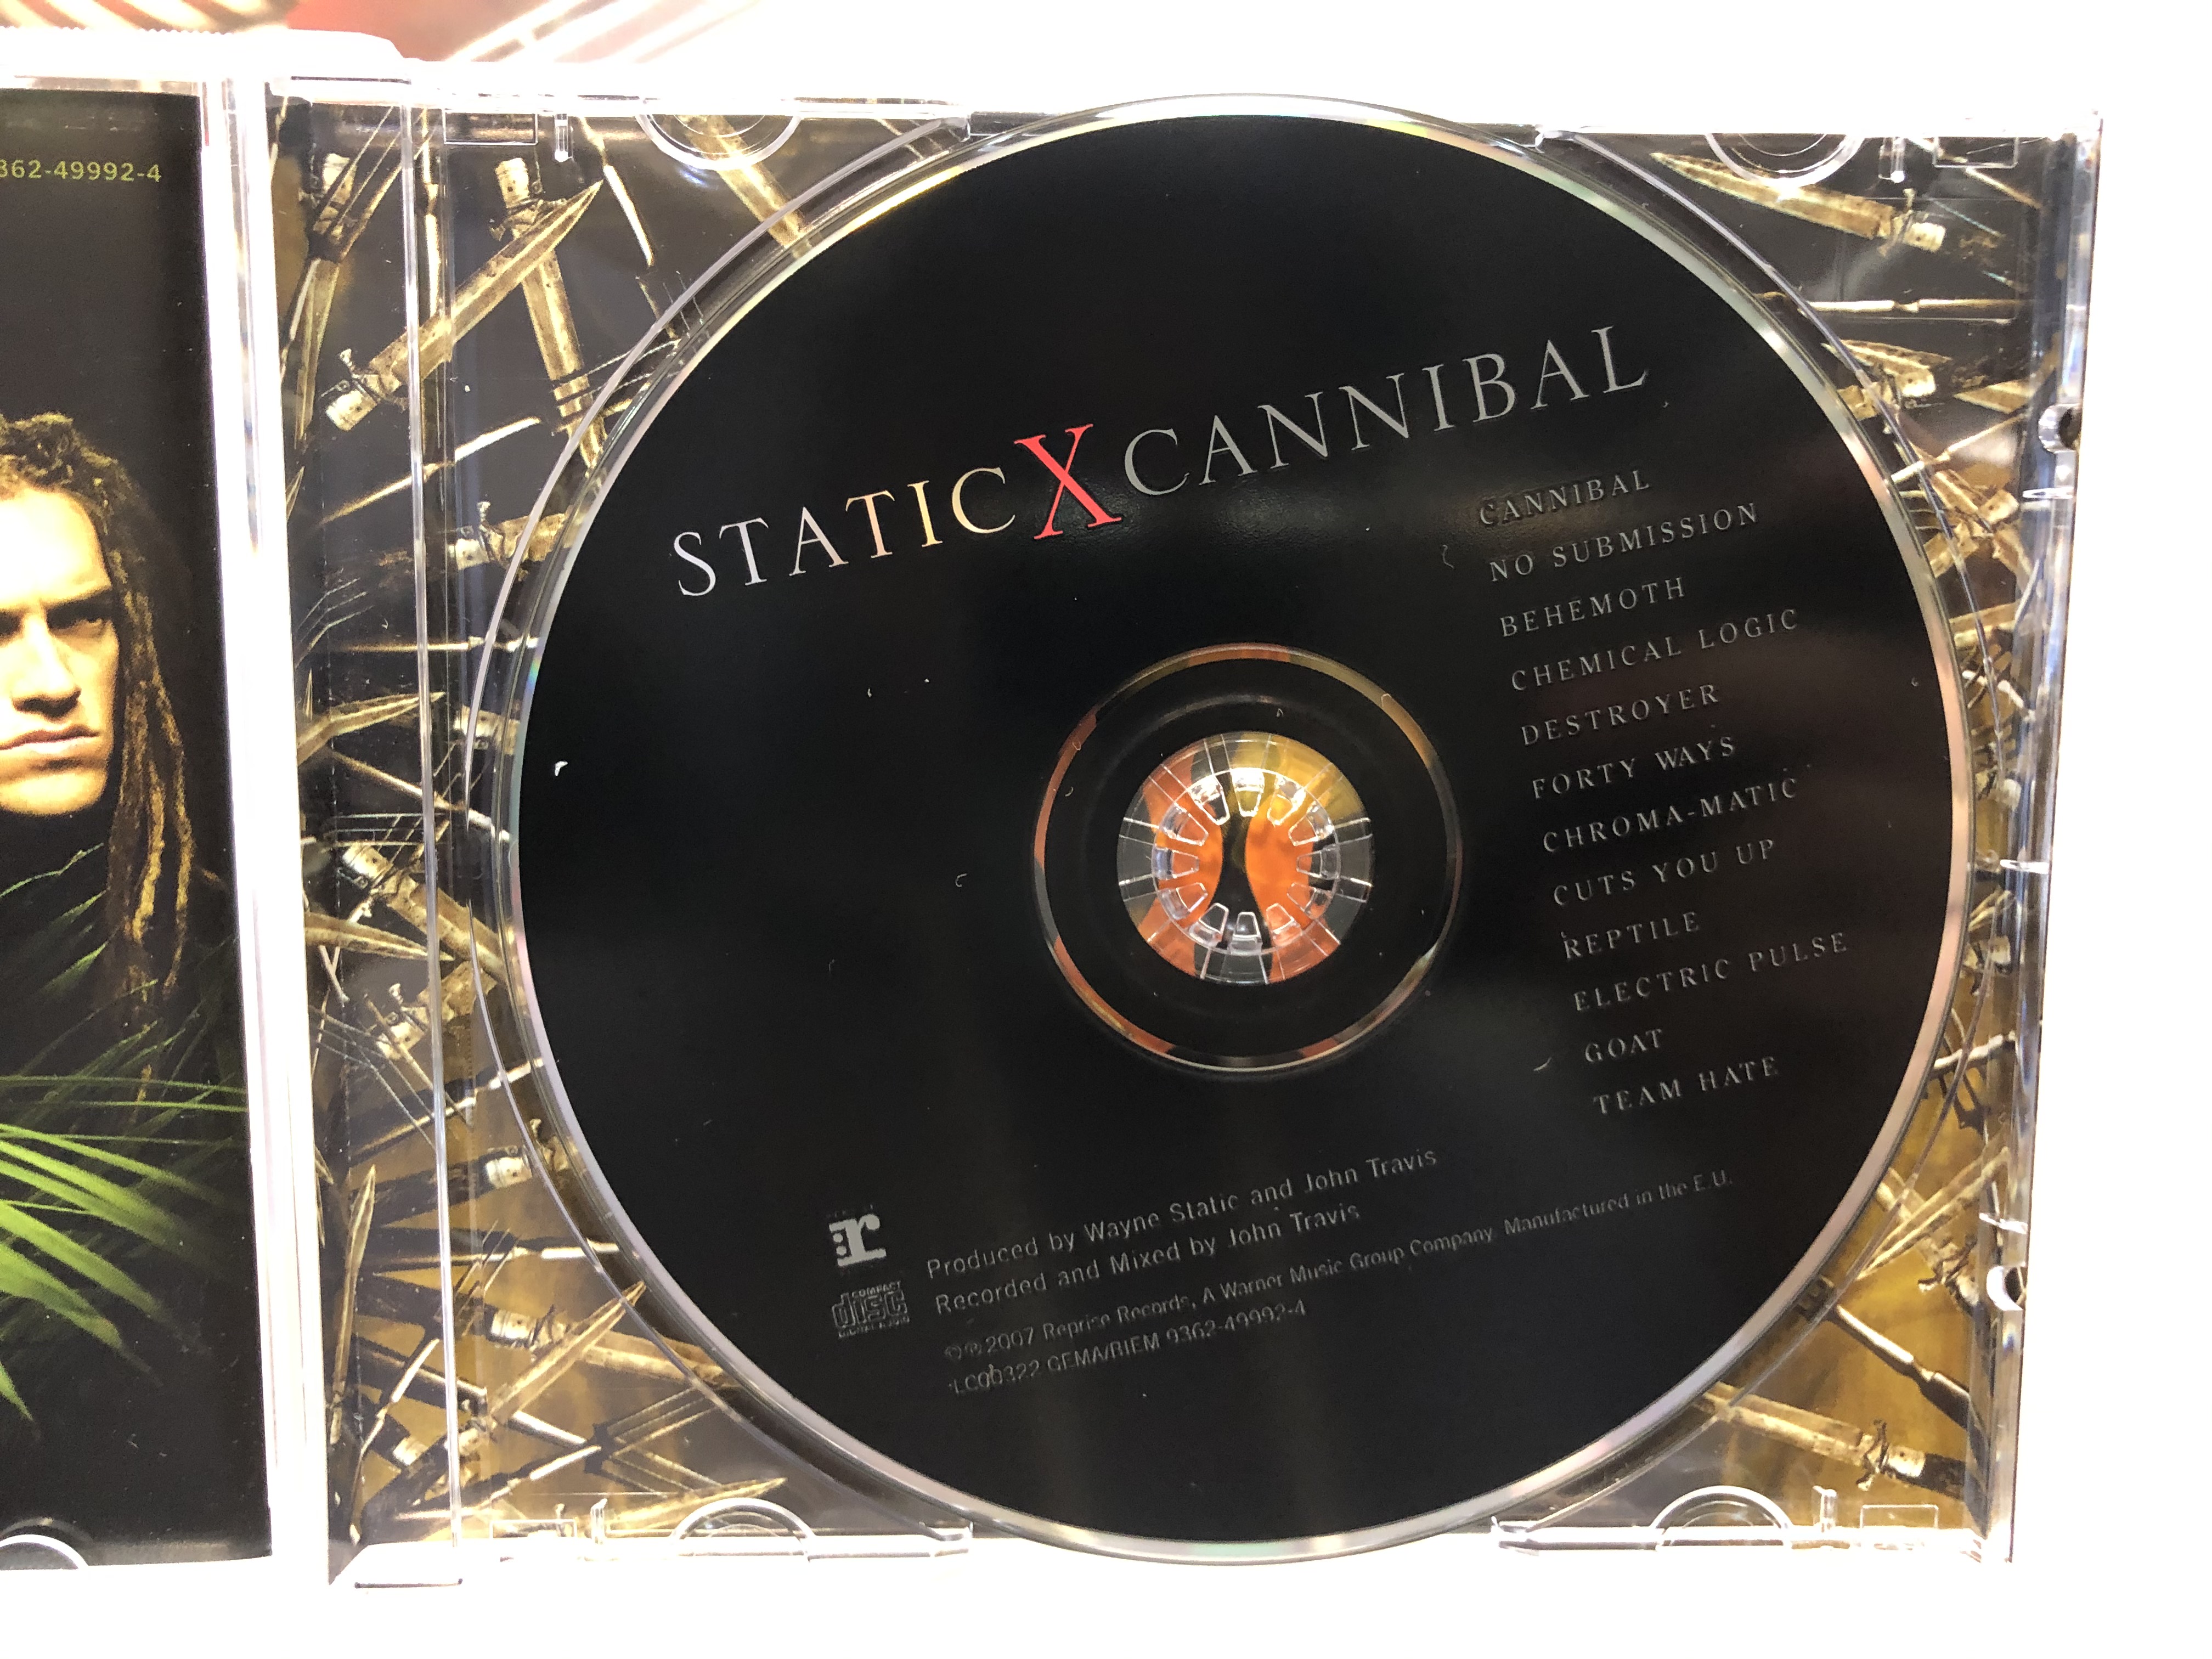 static-x-cannibal-reprise-records-audio-cd-2007-9362-49992-4-3-.jpg